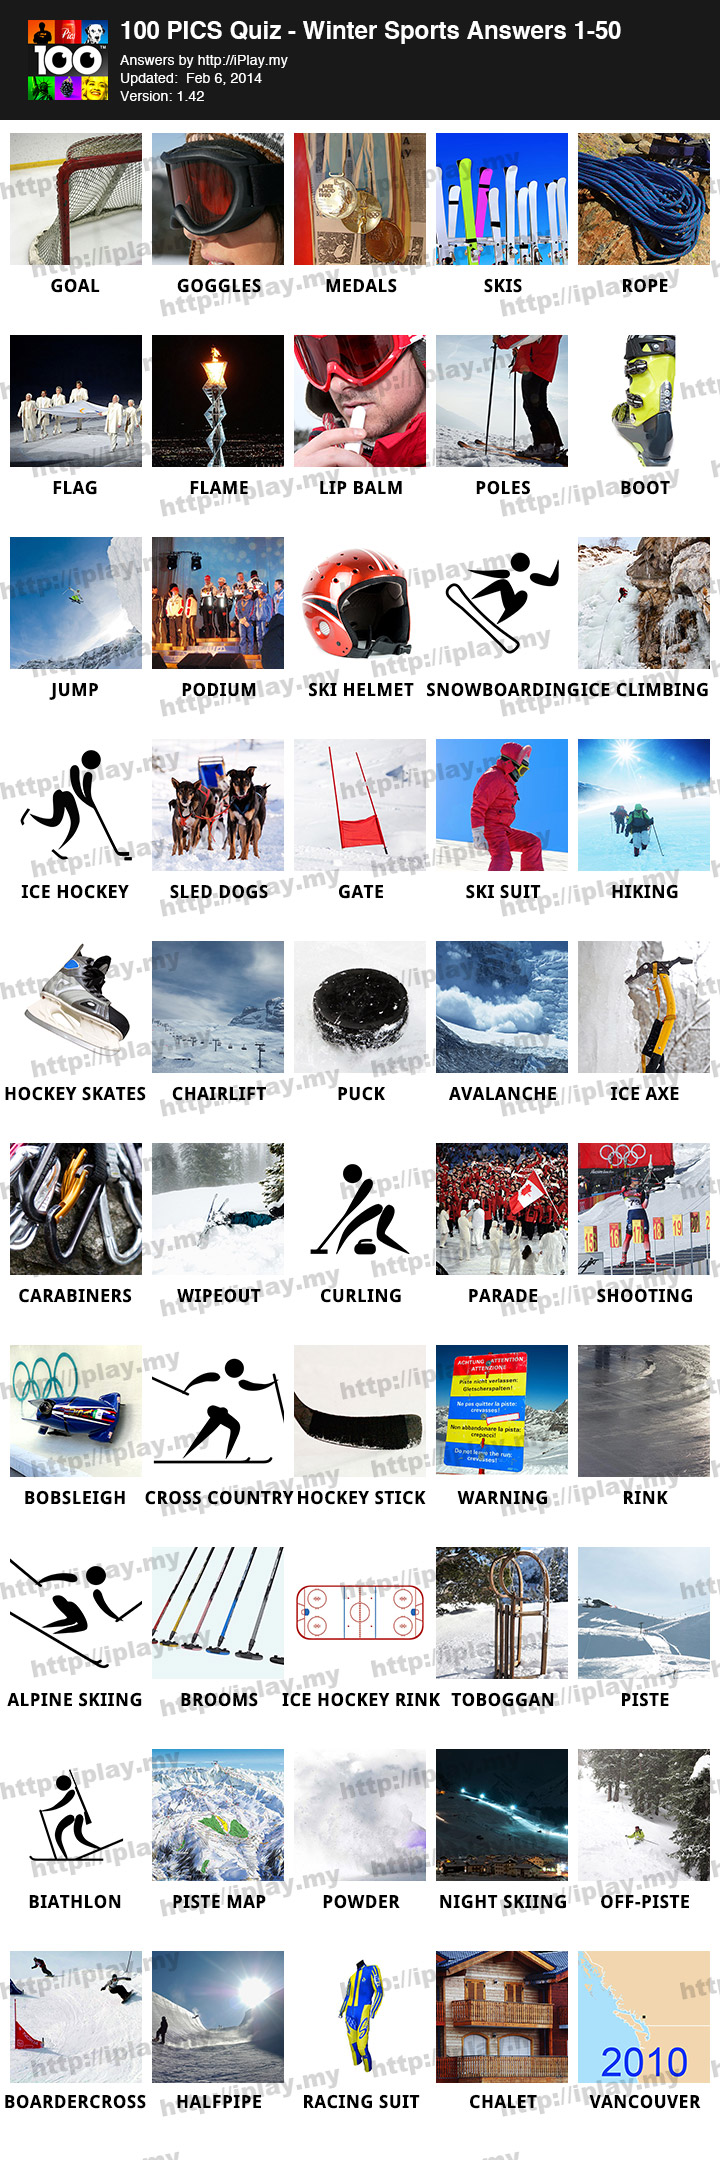 100-Pics-Quiz-Winter-Sports-Answers-1-50